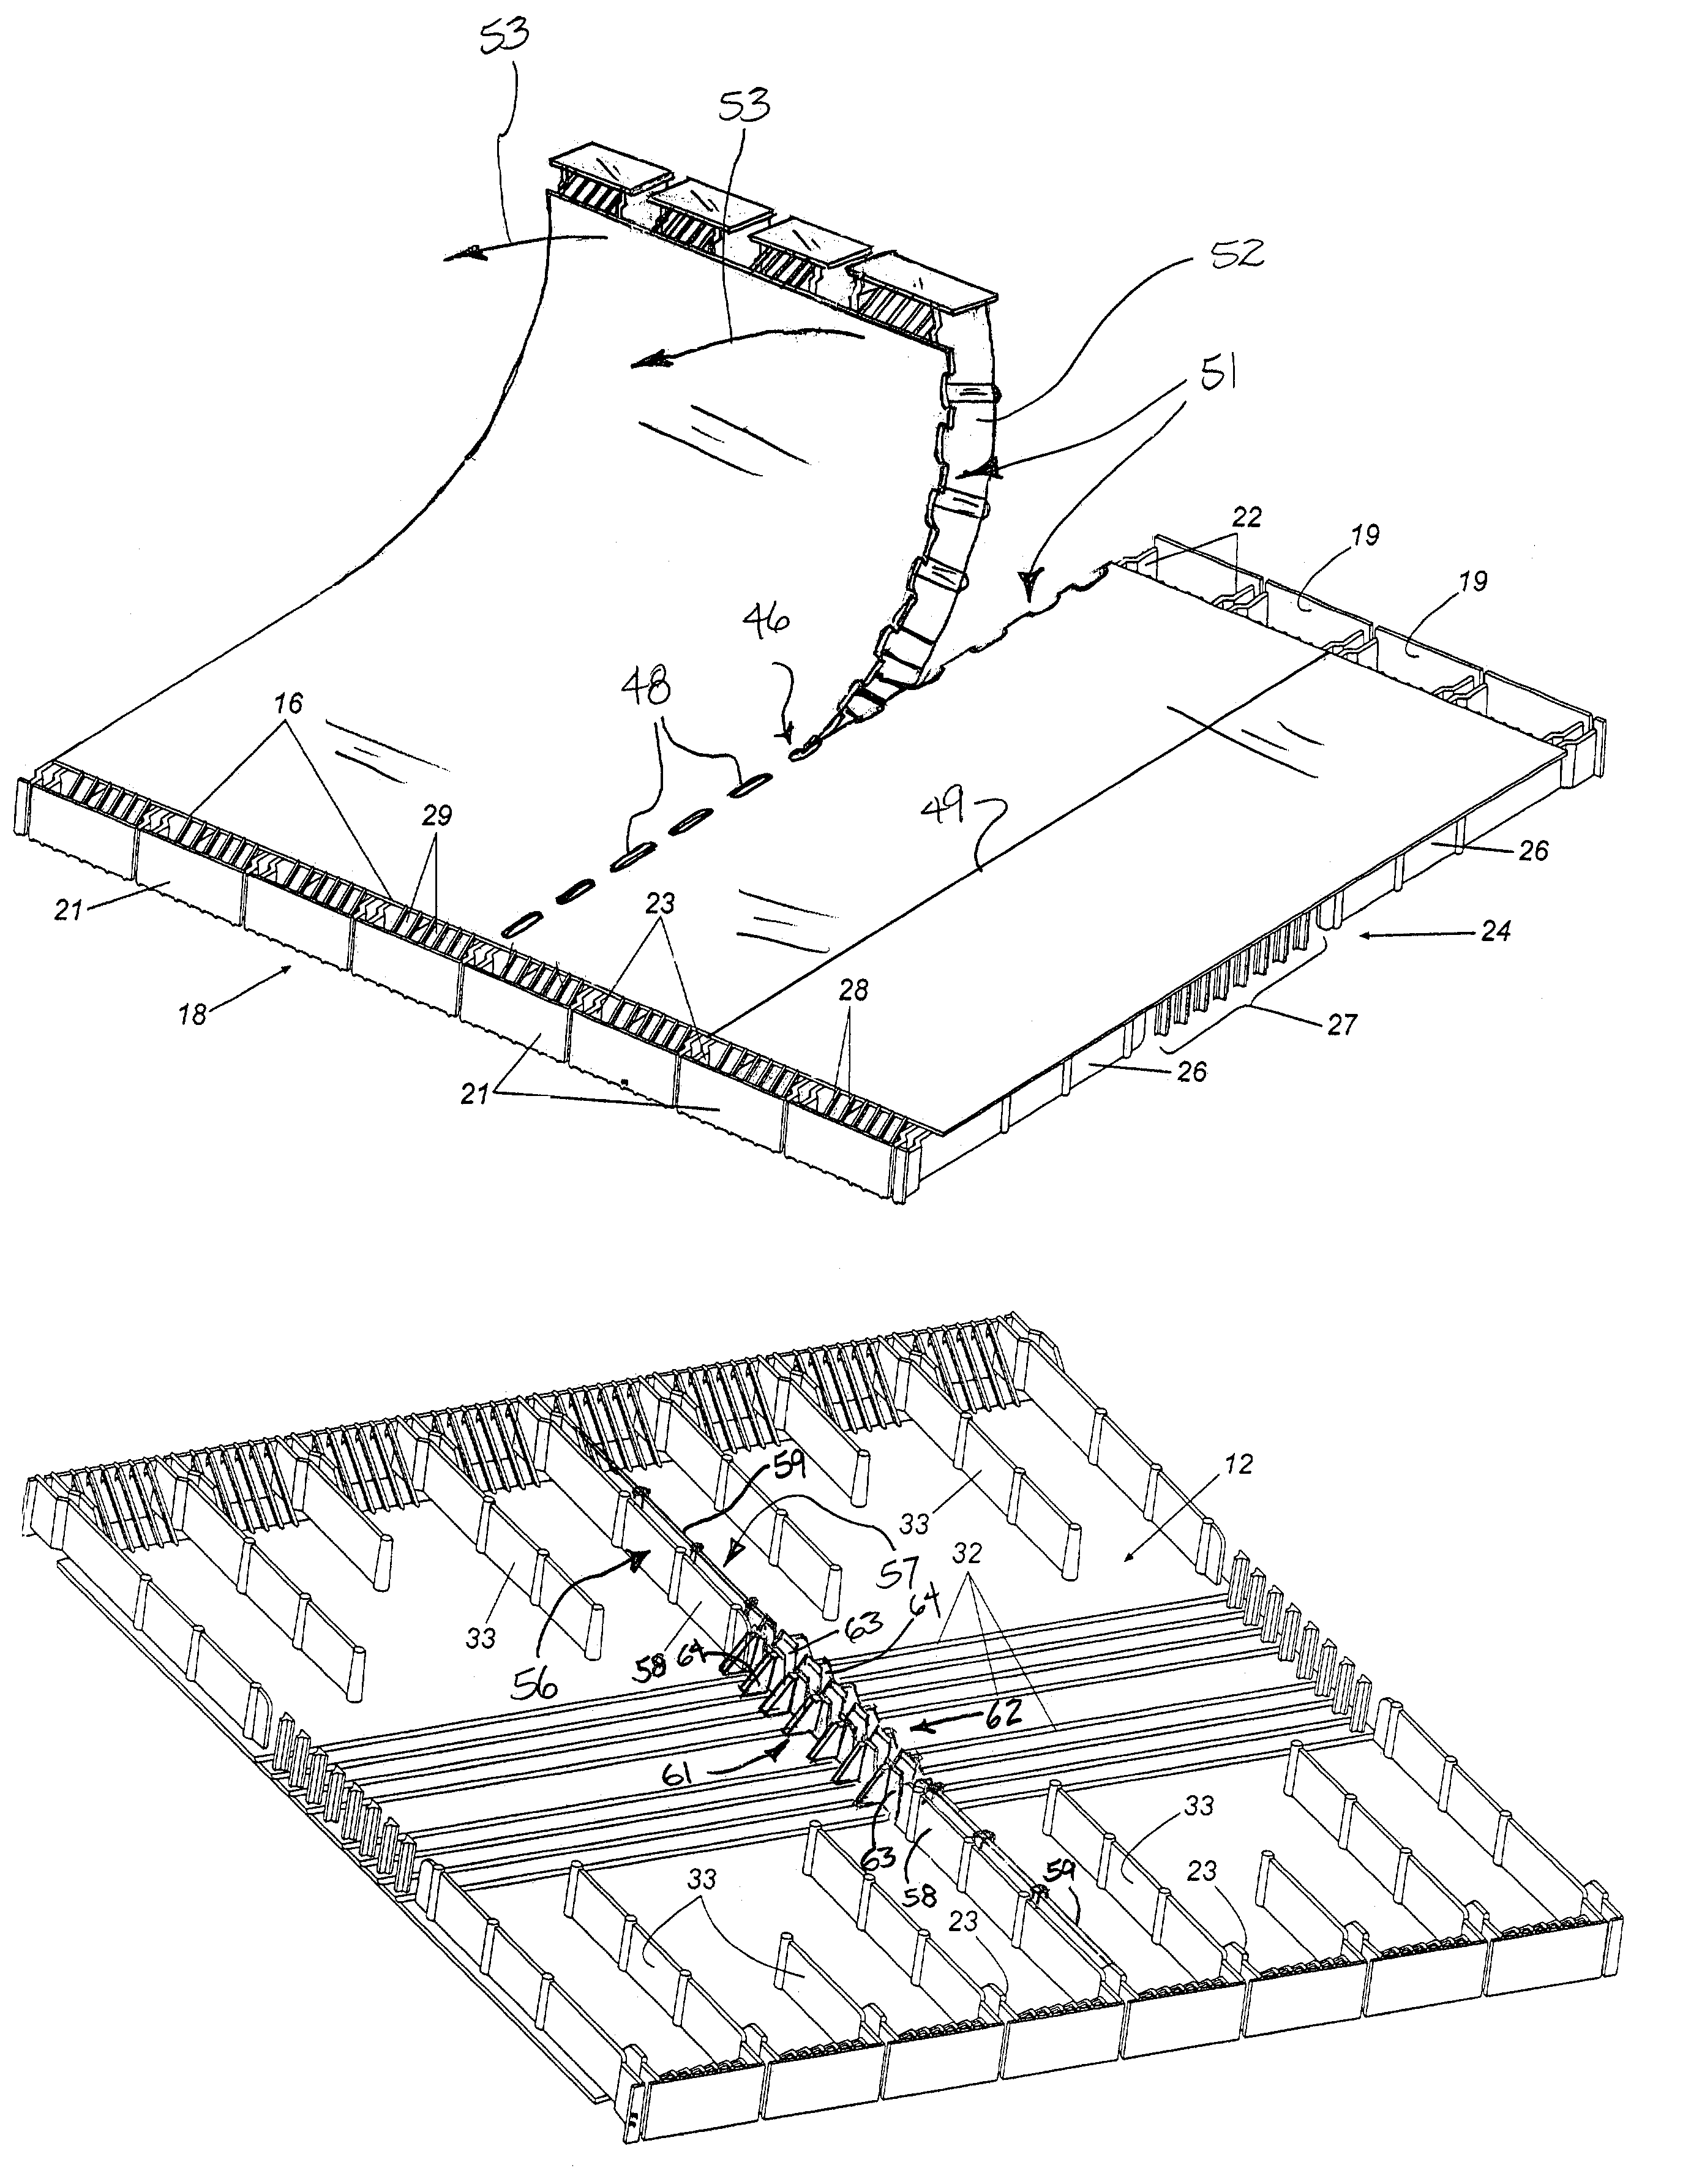 Manually separable ridge vent